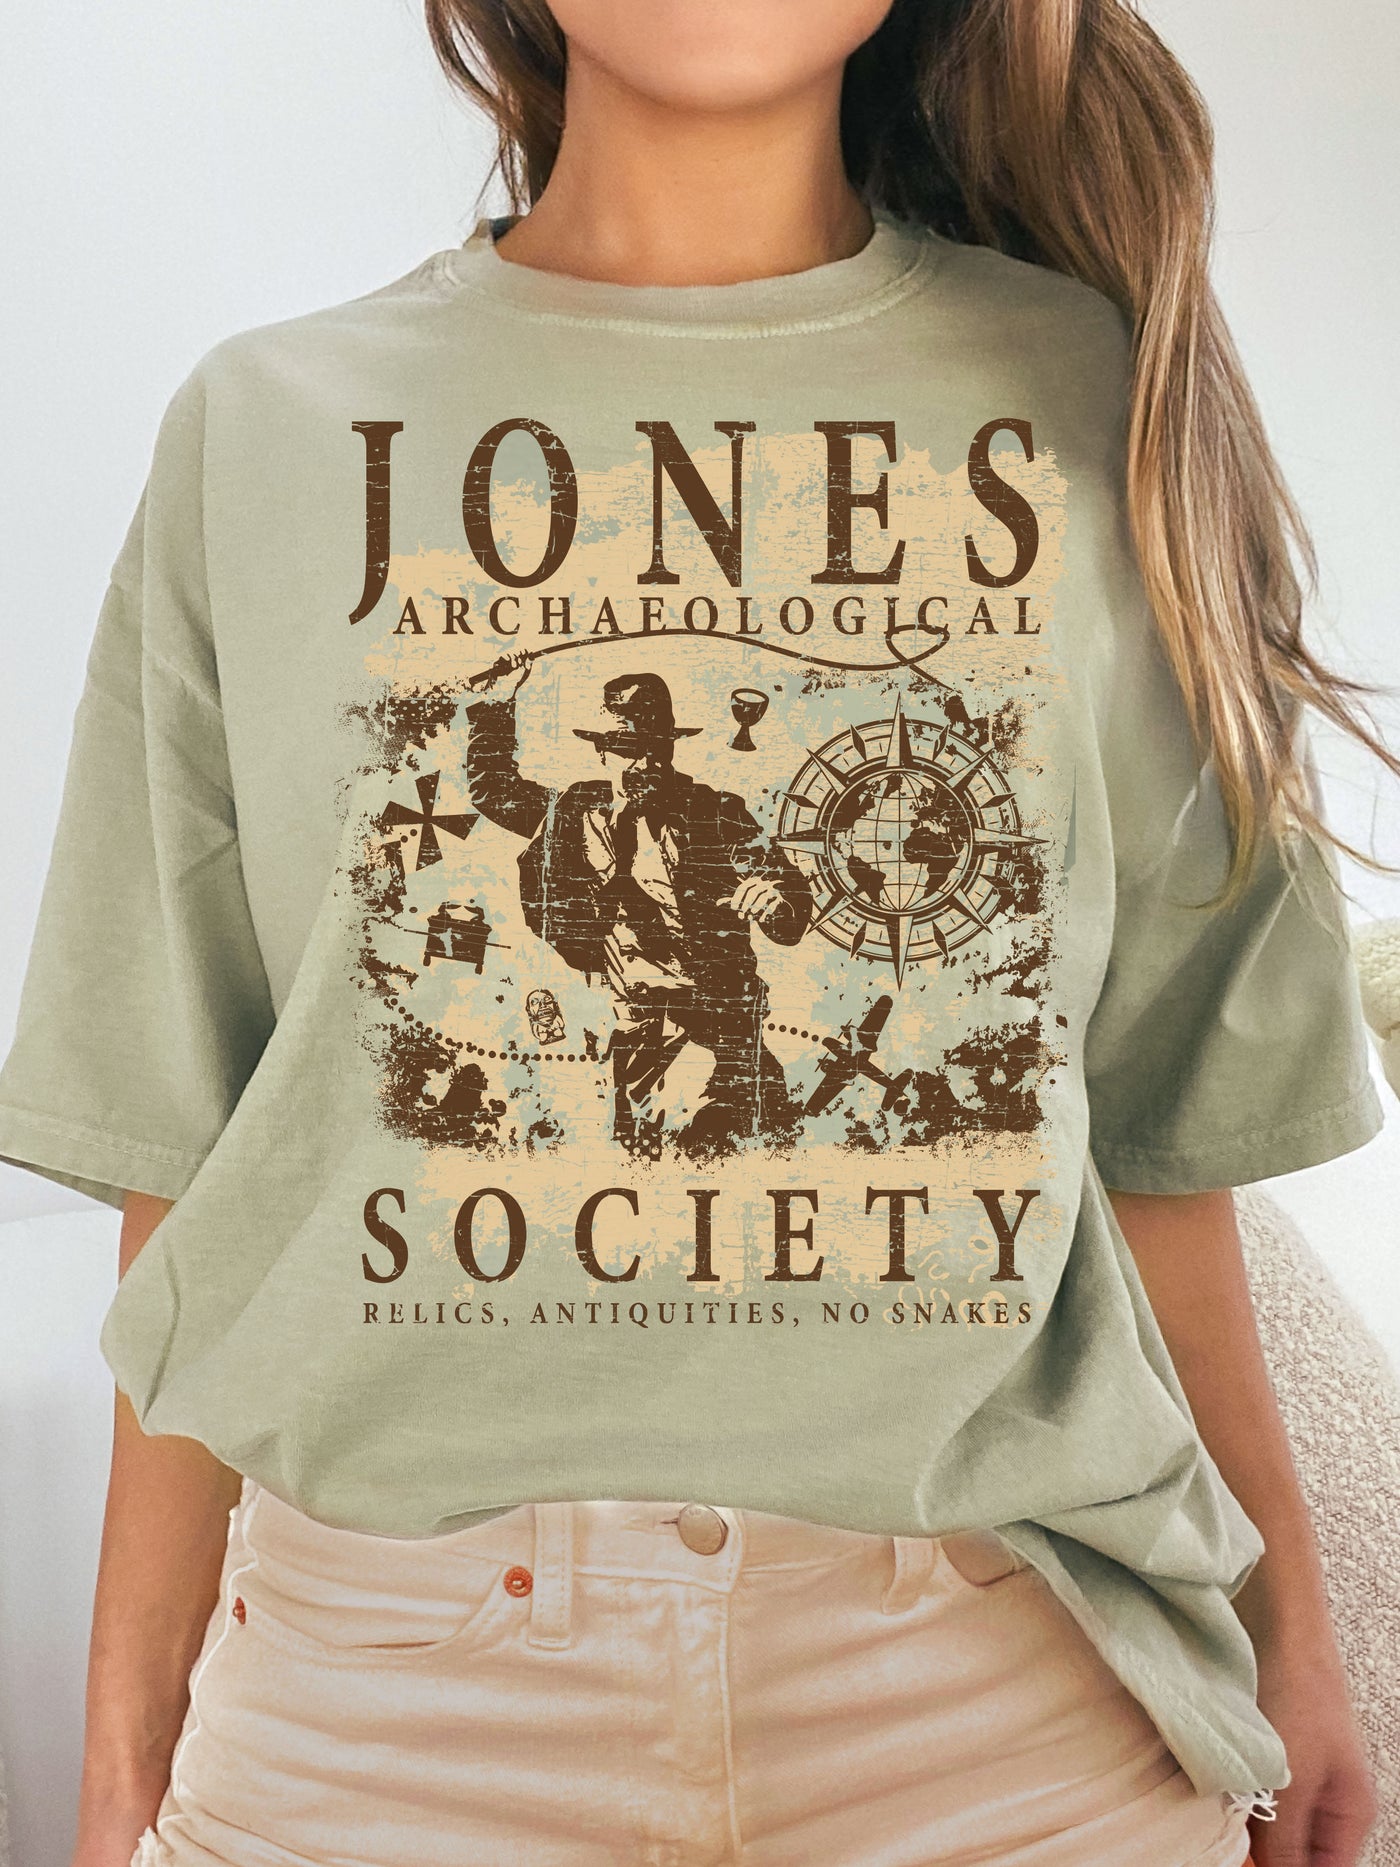 Indiana Jones Archaeological Society Shirt